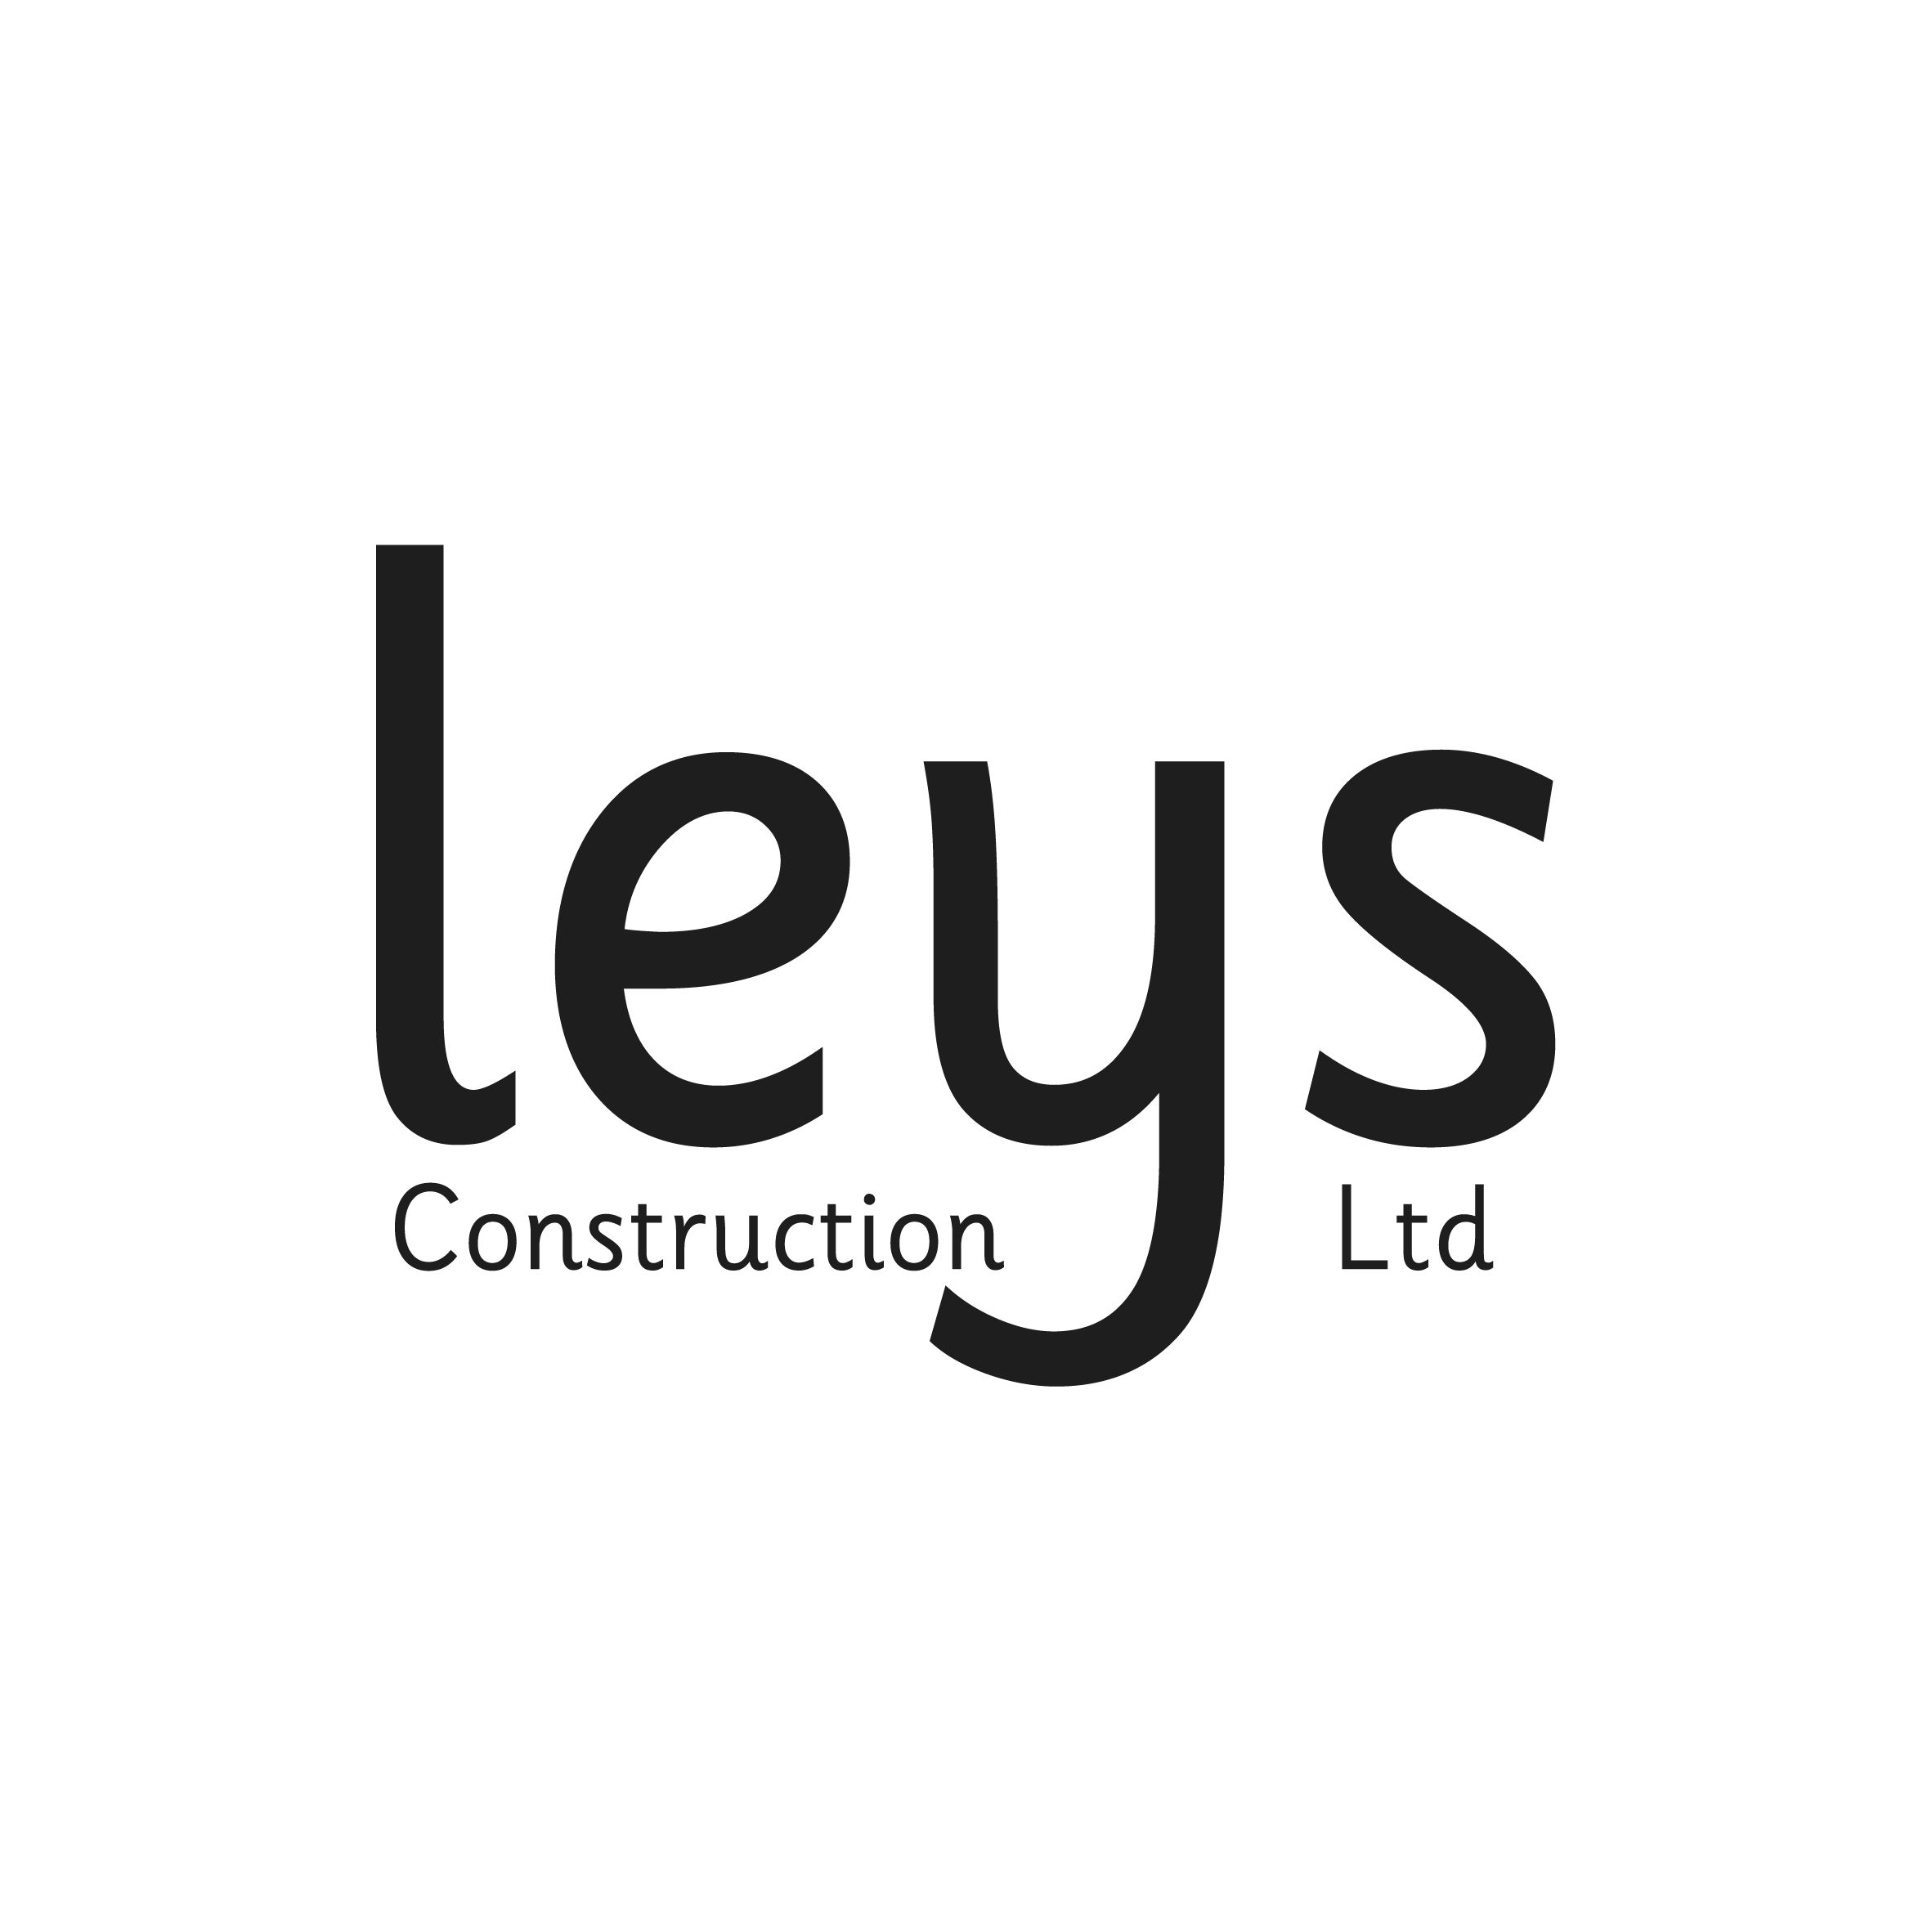 Leys Construction Limited logo